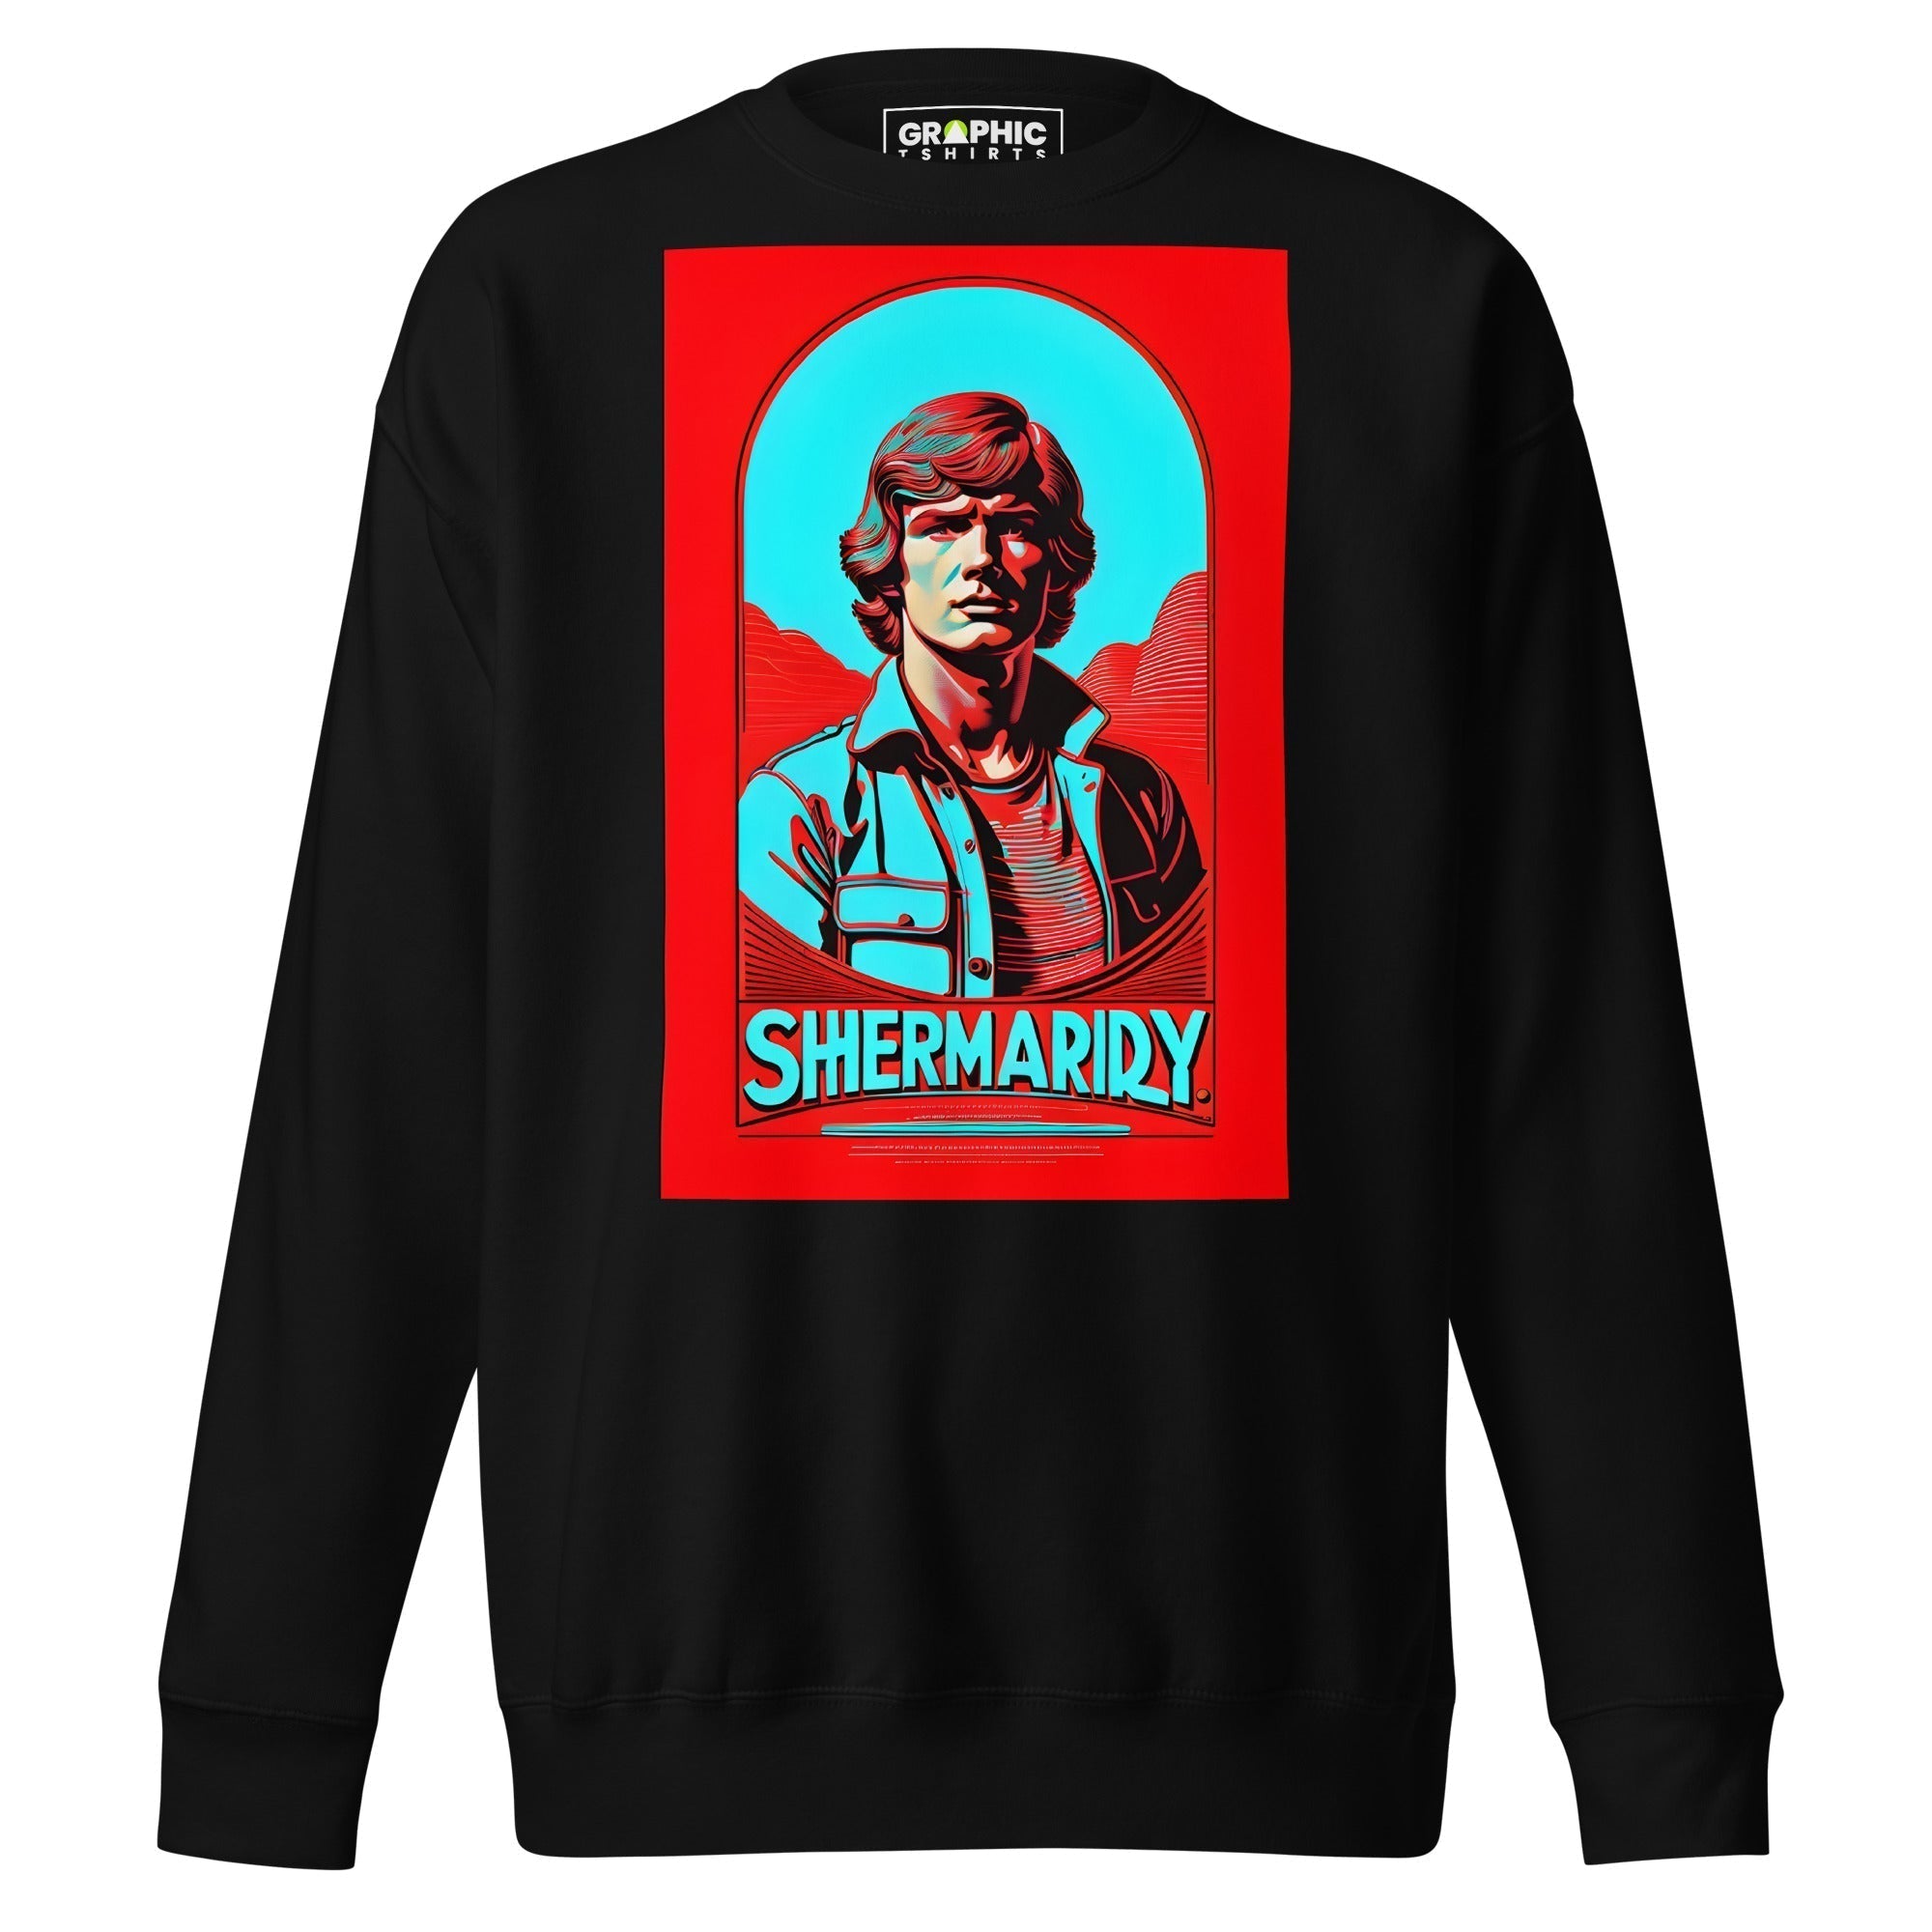 Unisex Premium Sweatshirt - Vintage American Superstar Series v.6 - GRAPHIC T-SHIRTS